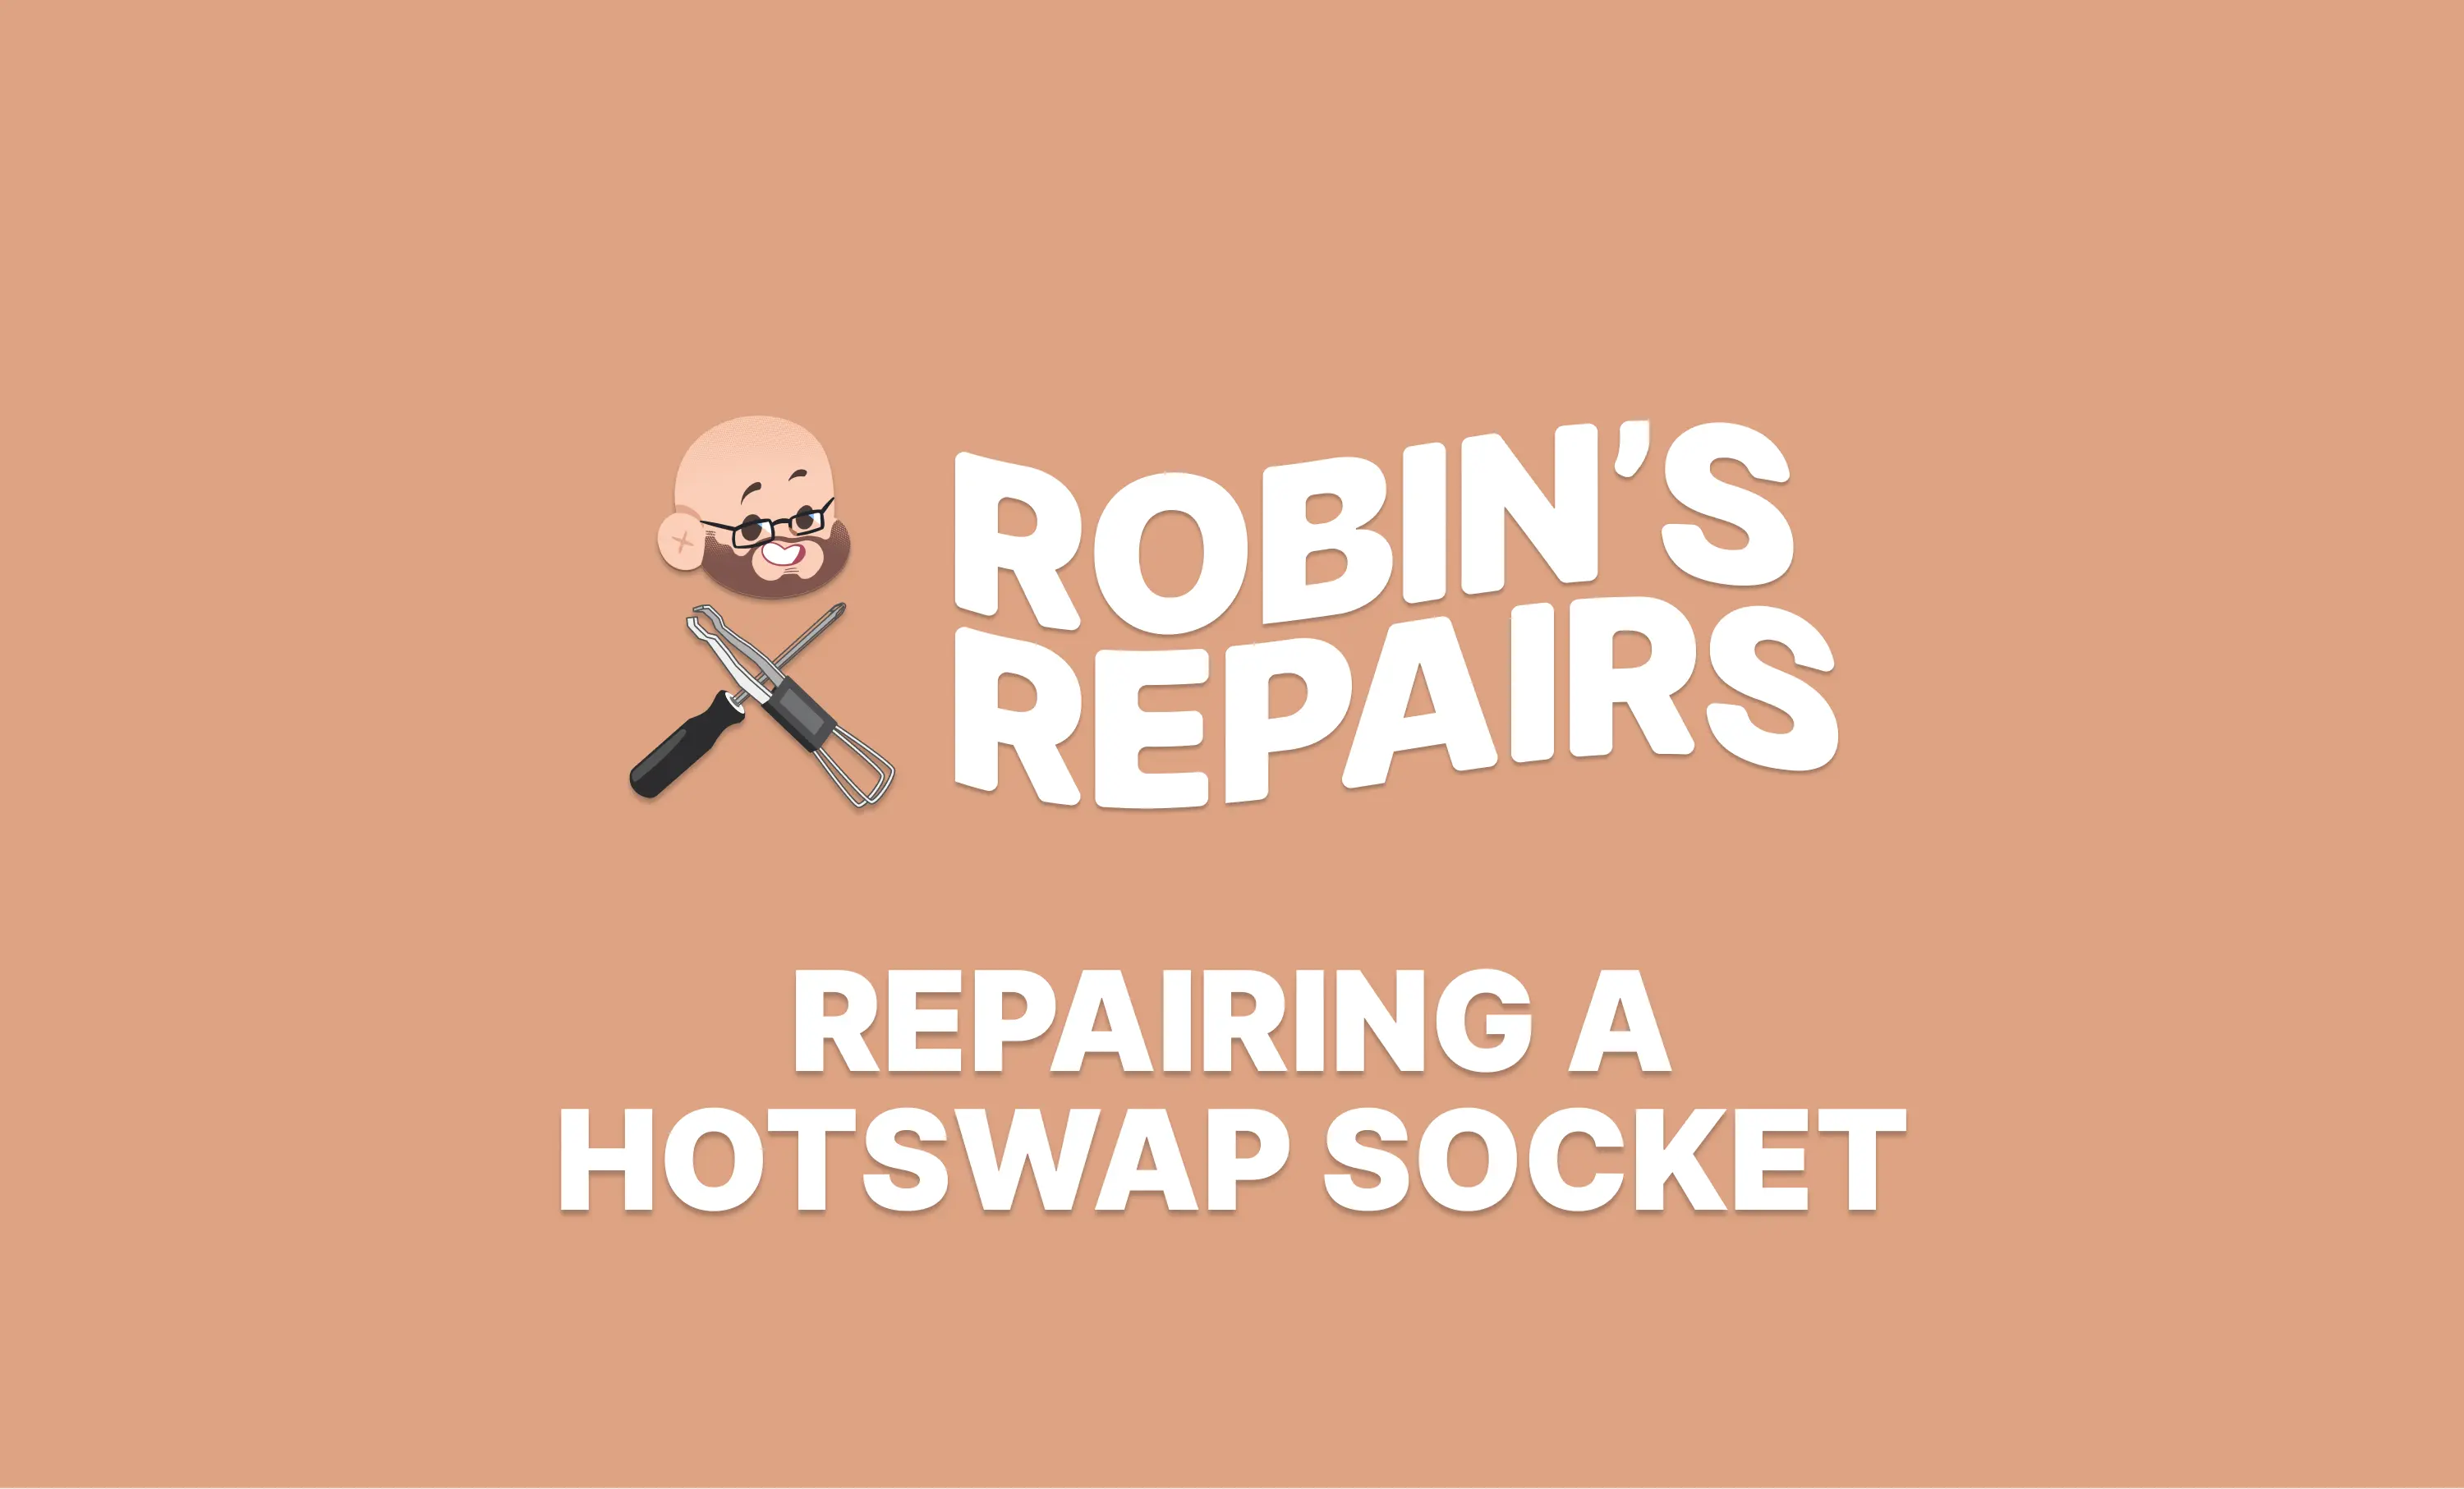 Repairing a hotswap socket